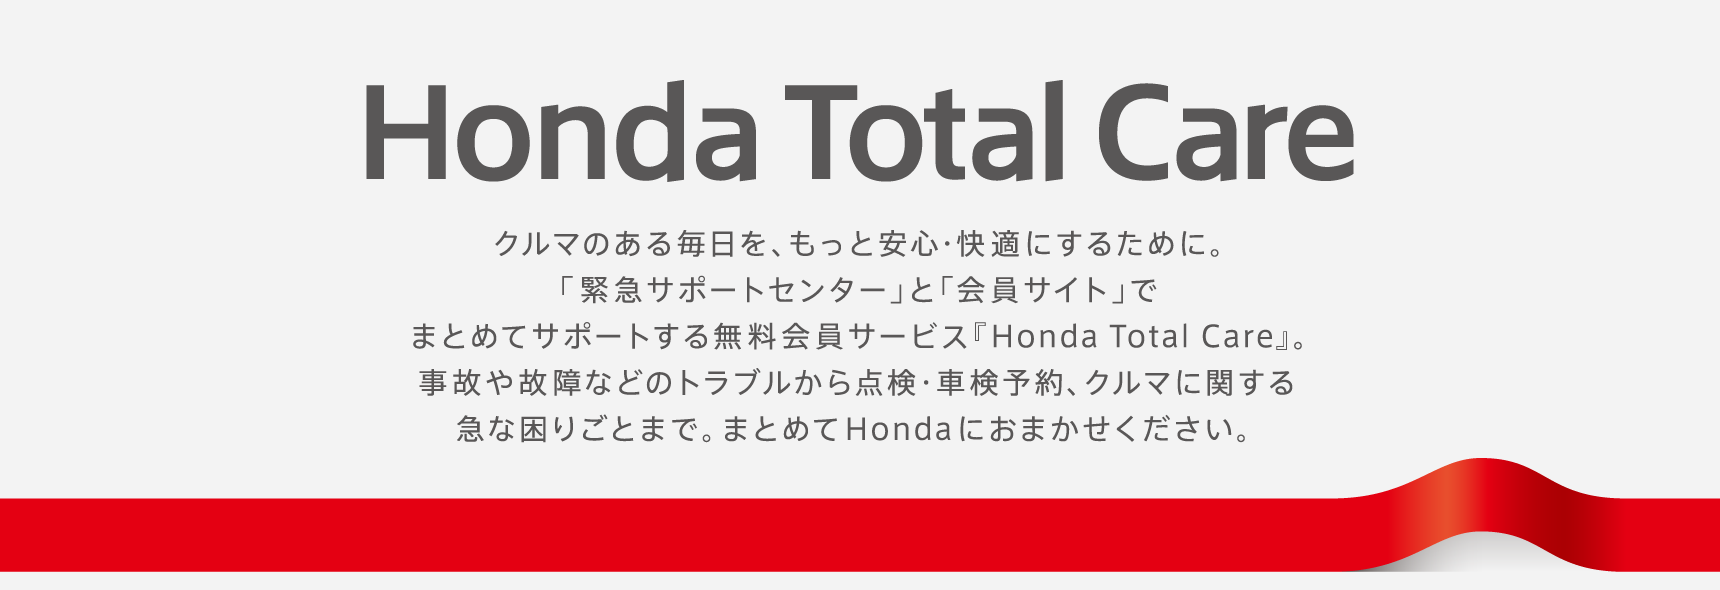 Hondaトータルケア